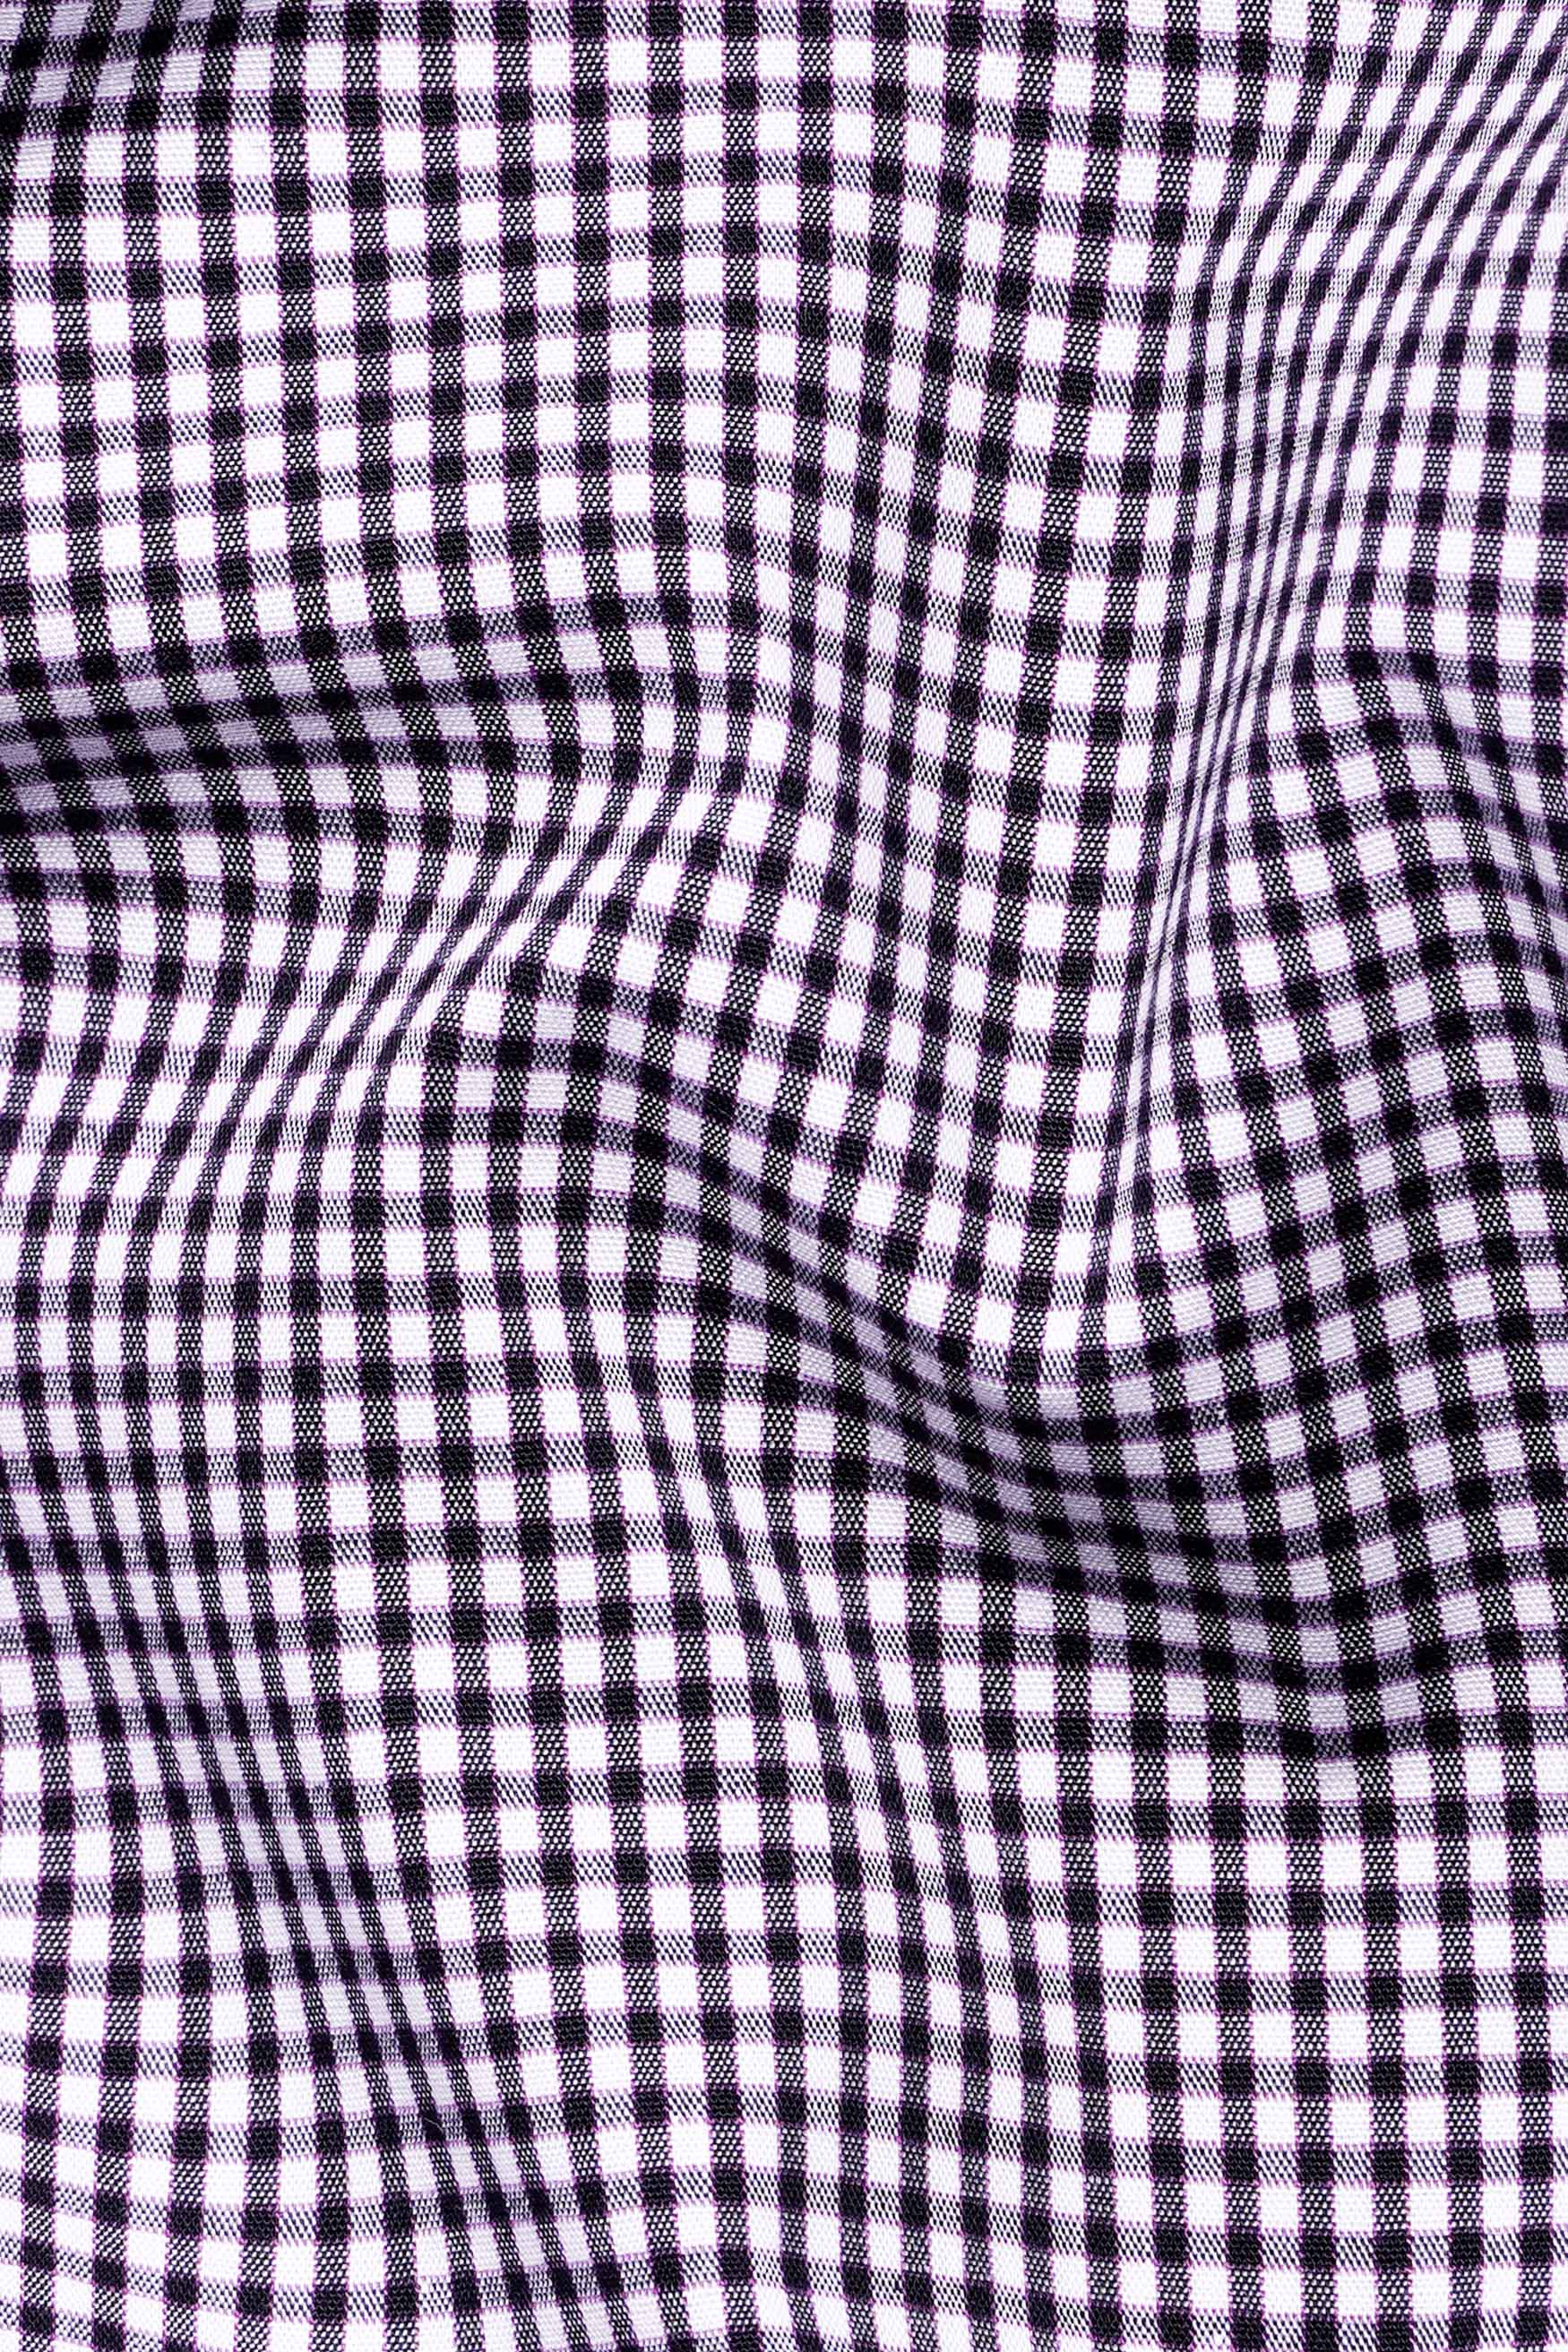 Affair Purple and Black Gingham Checkered Premium Cotton Shirt